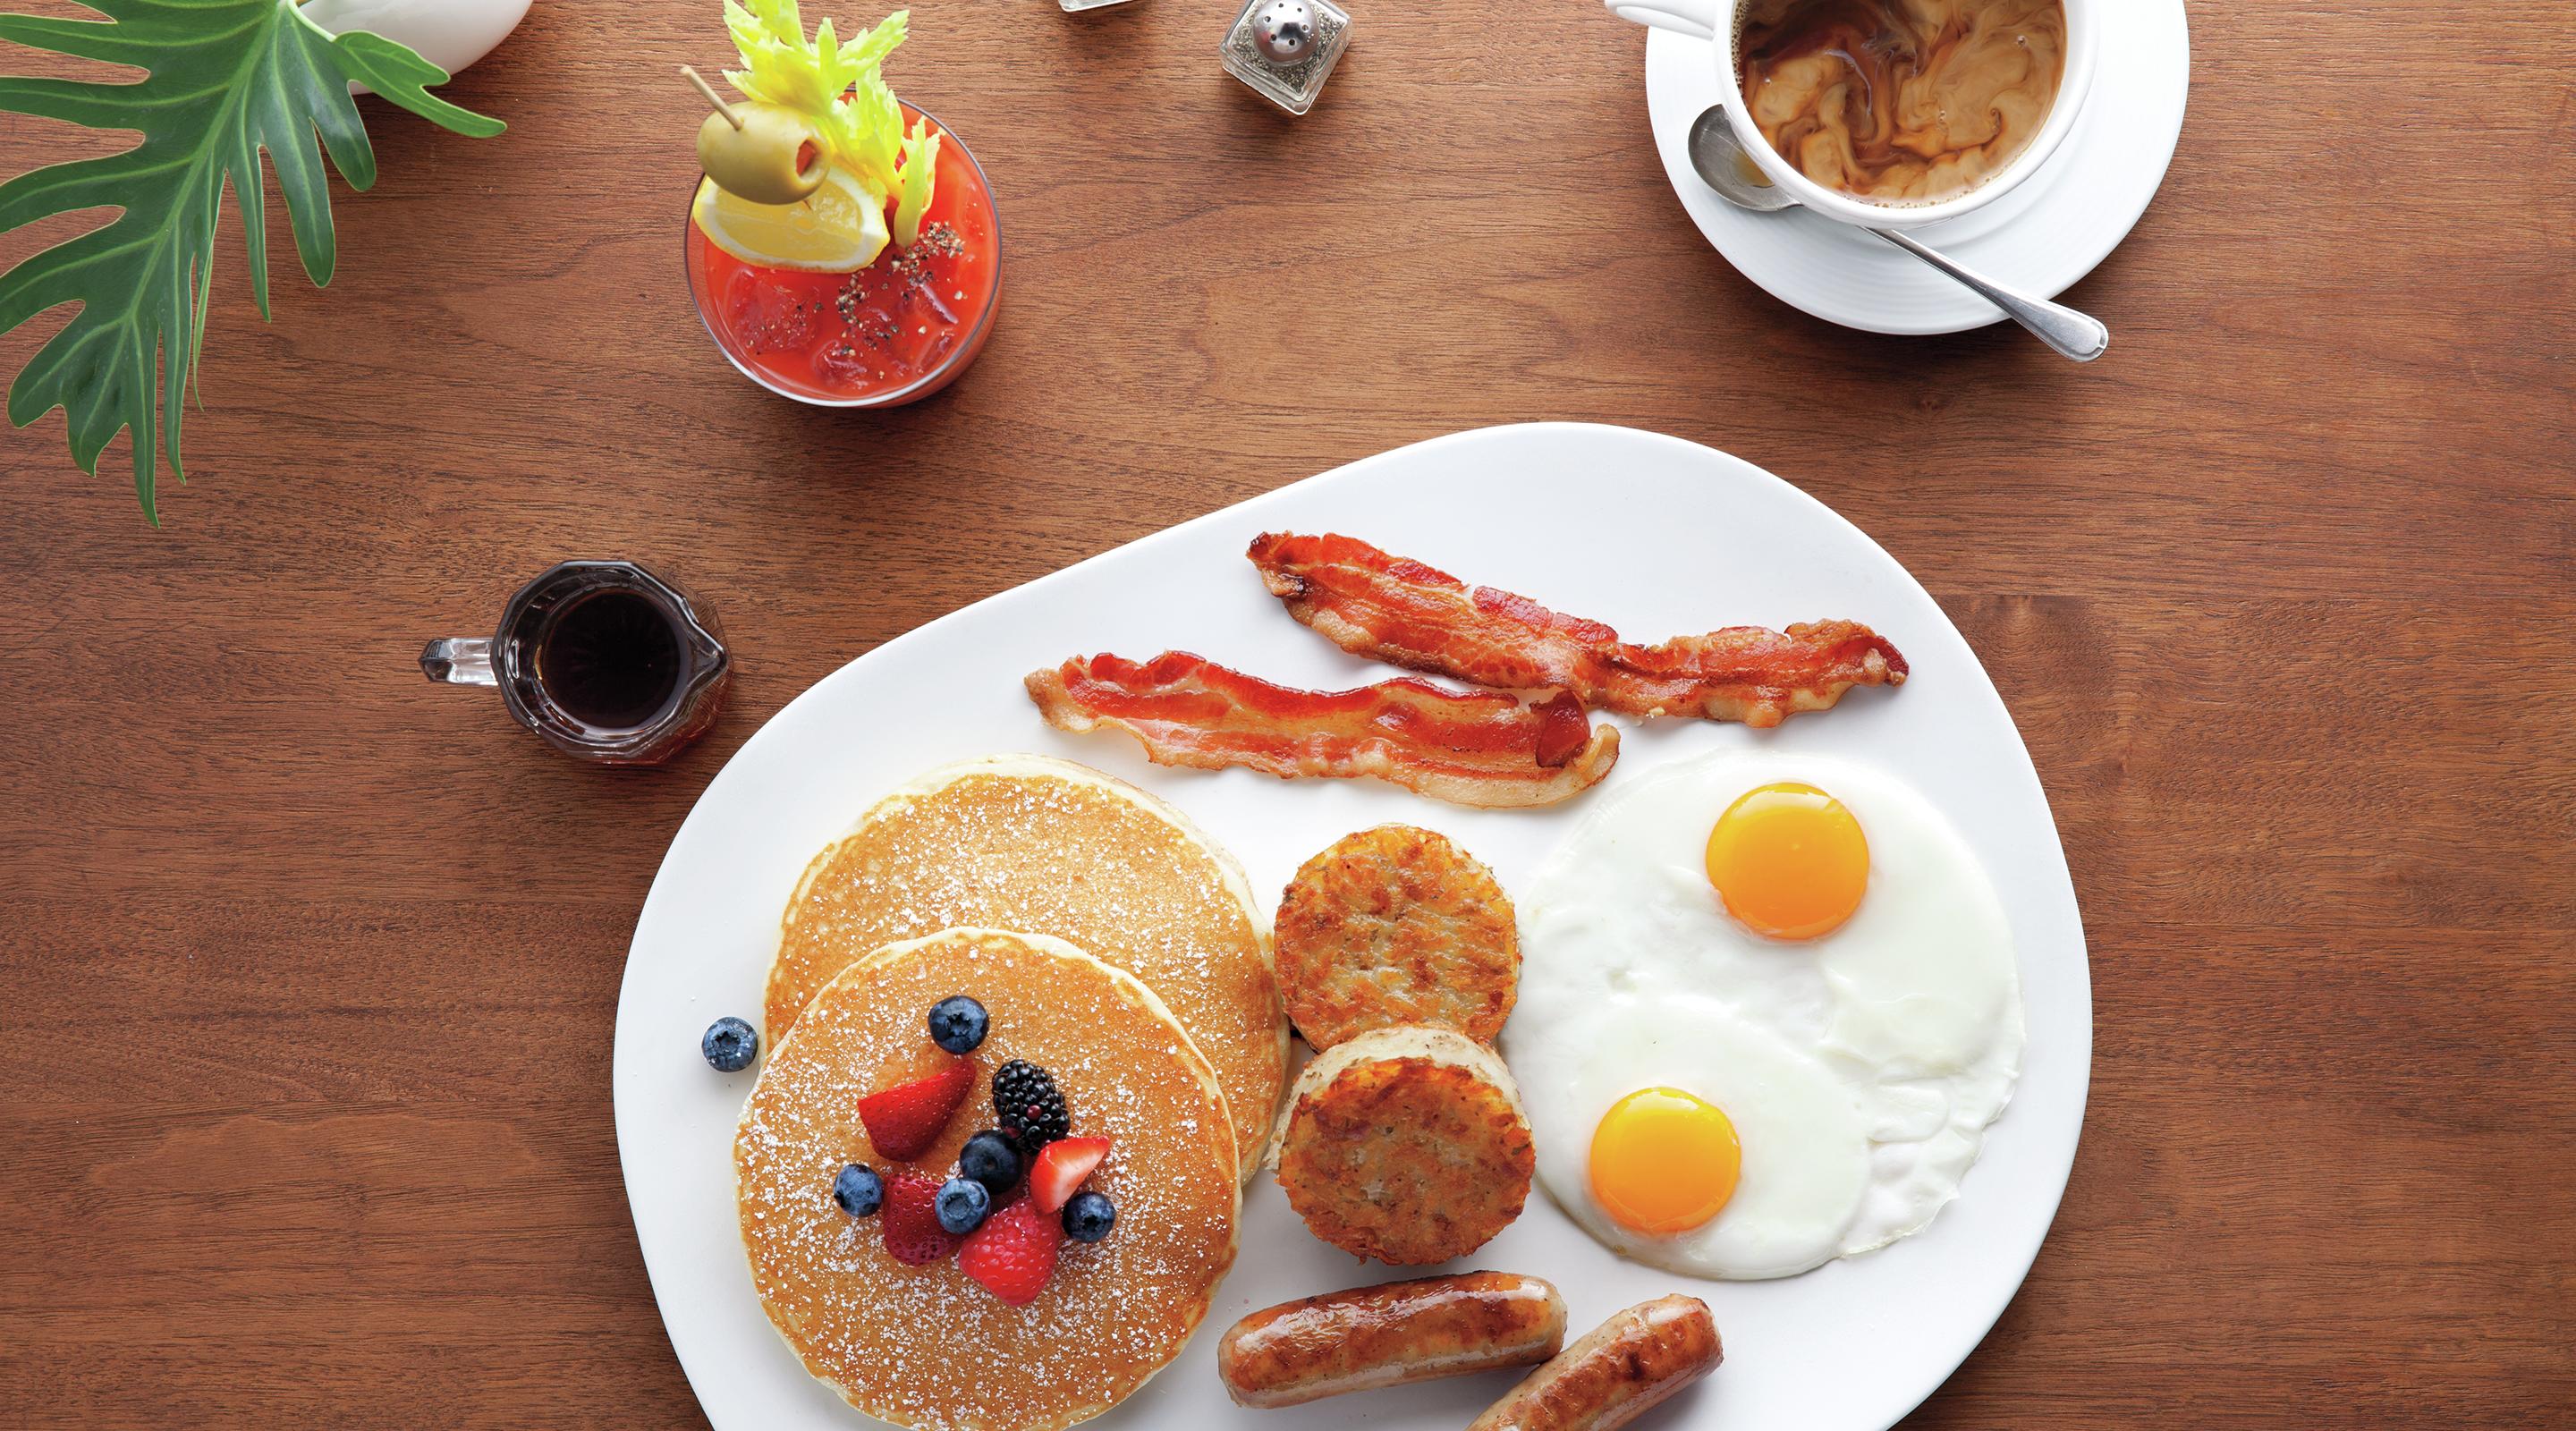 We breakfasted. Американ Брекфаст. Американский завтрак на новый год. Модерн завтрак. Американский завтрак хашбраун.